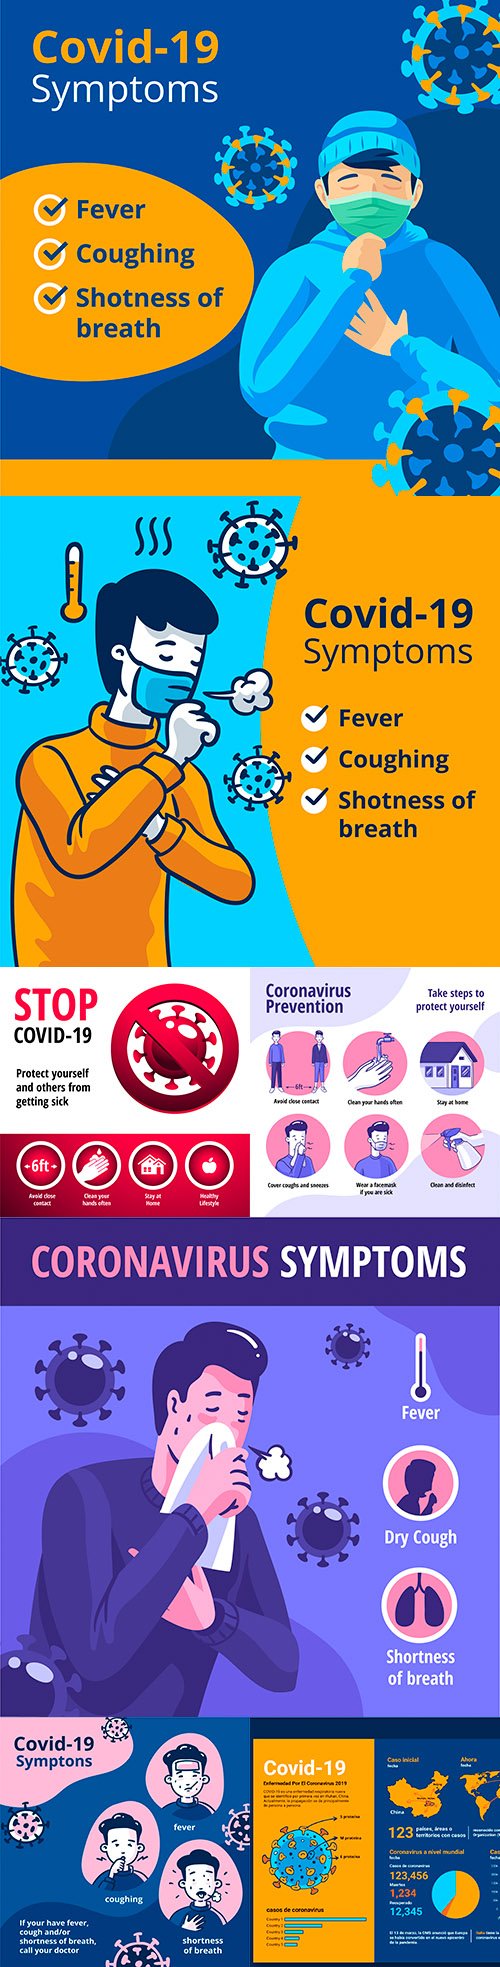 Coronavirus symptoms and illustration prevention tips